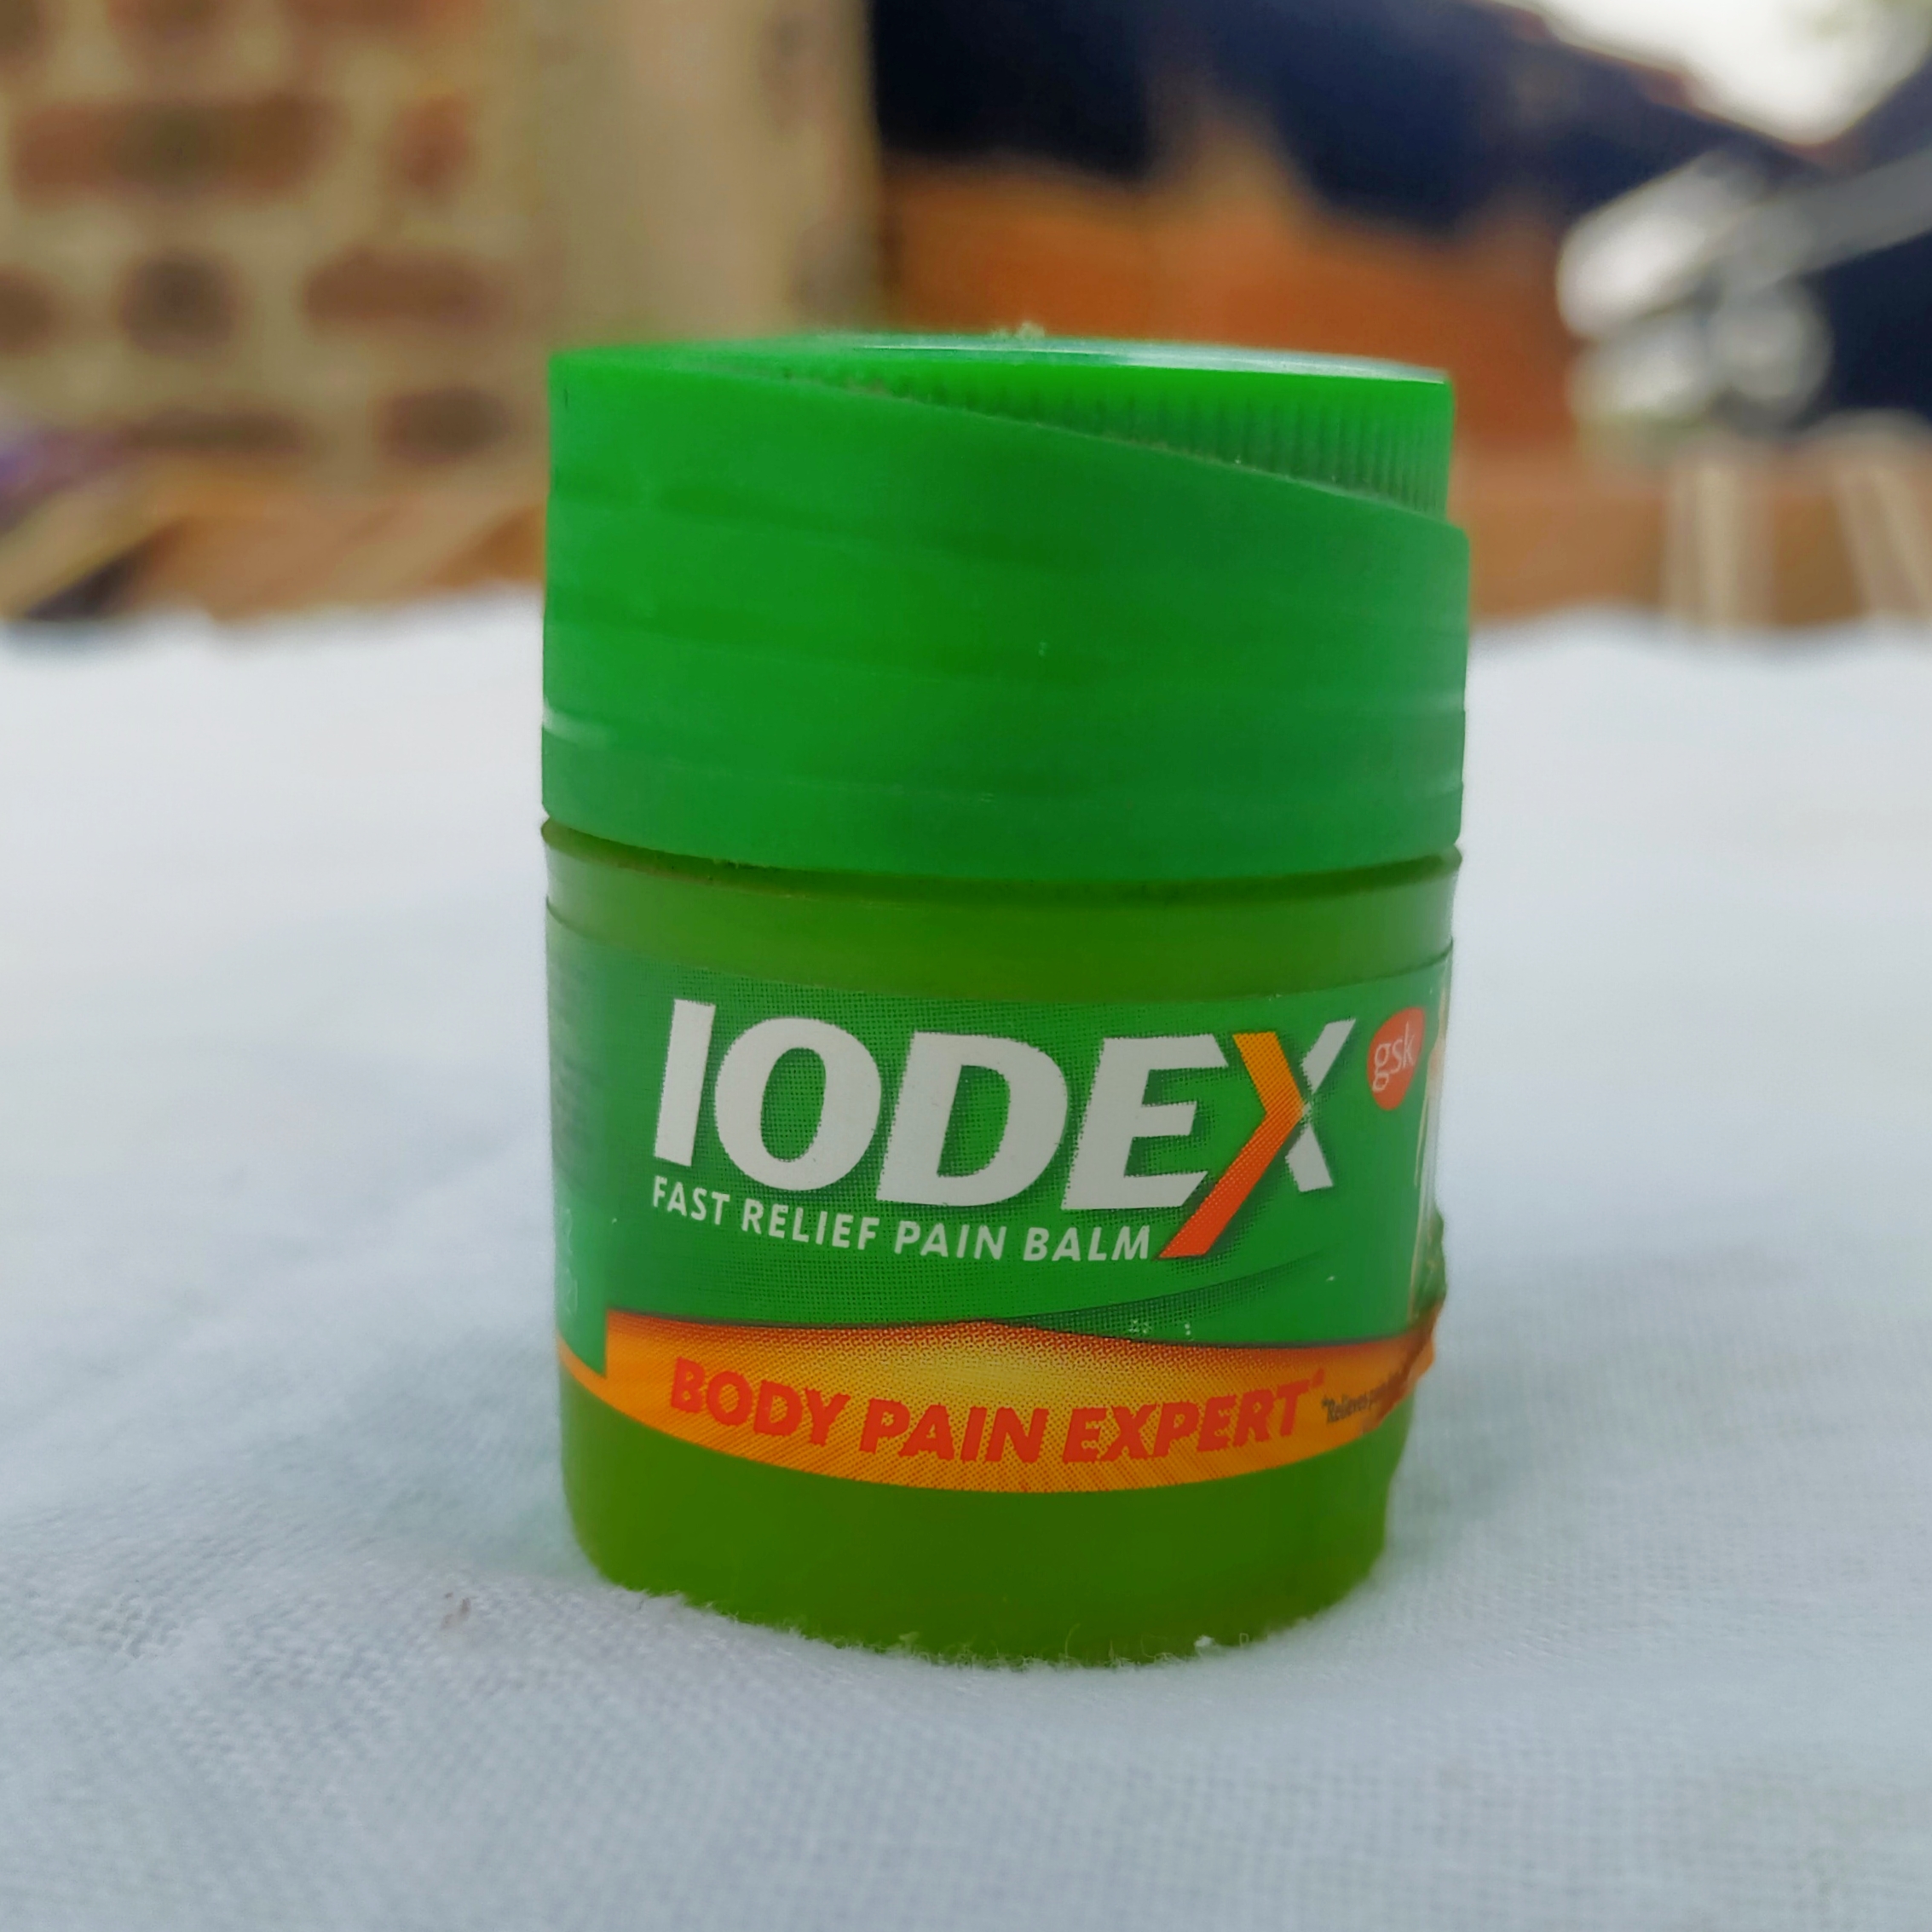 Iodex pain relief balm